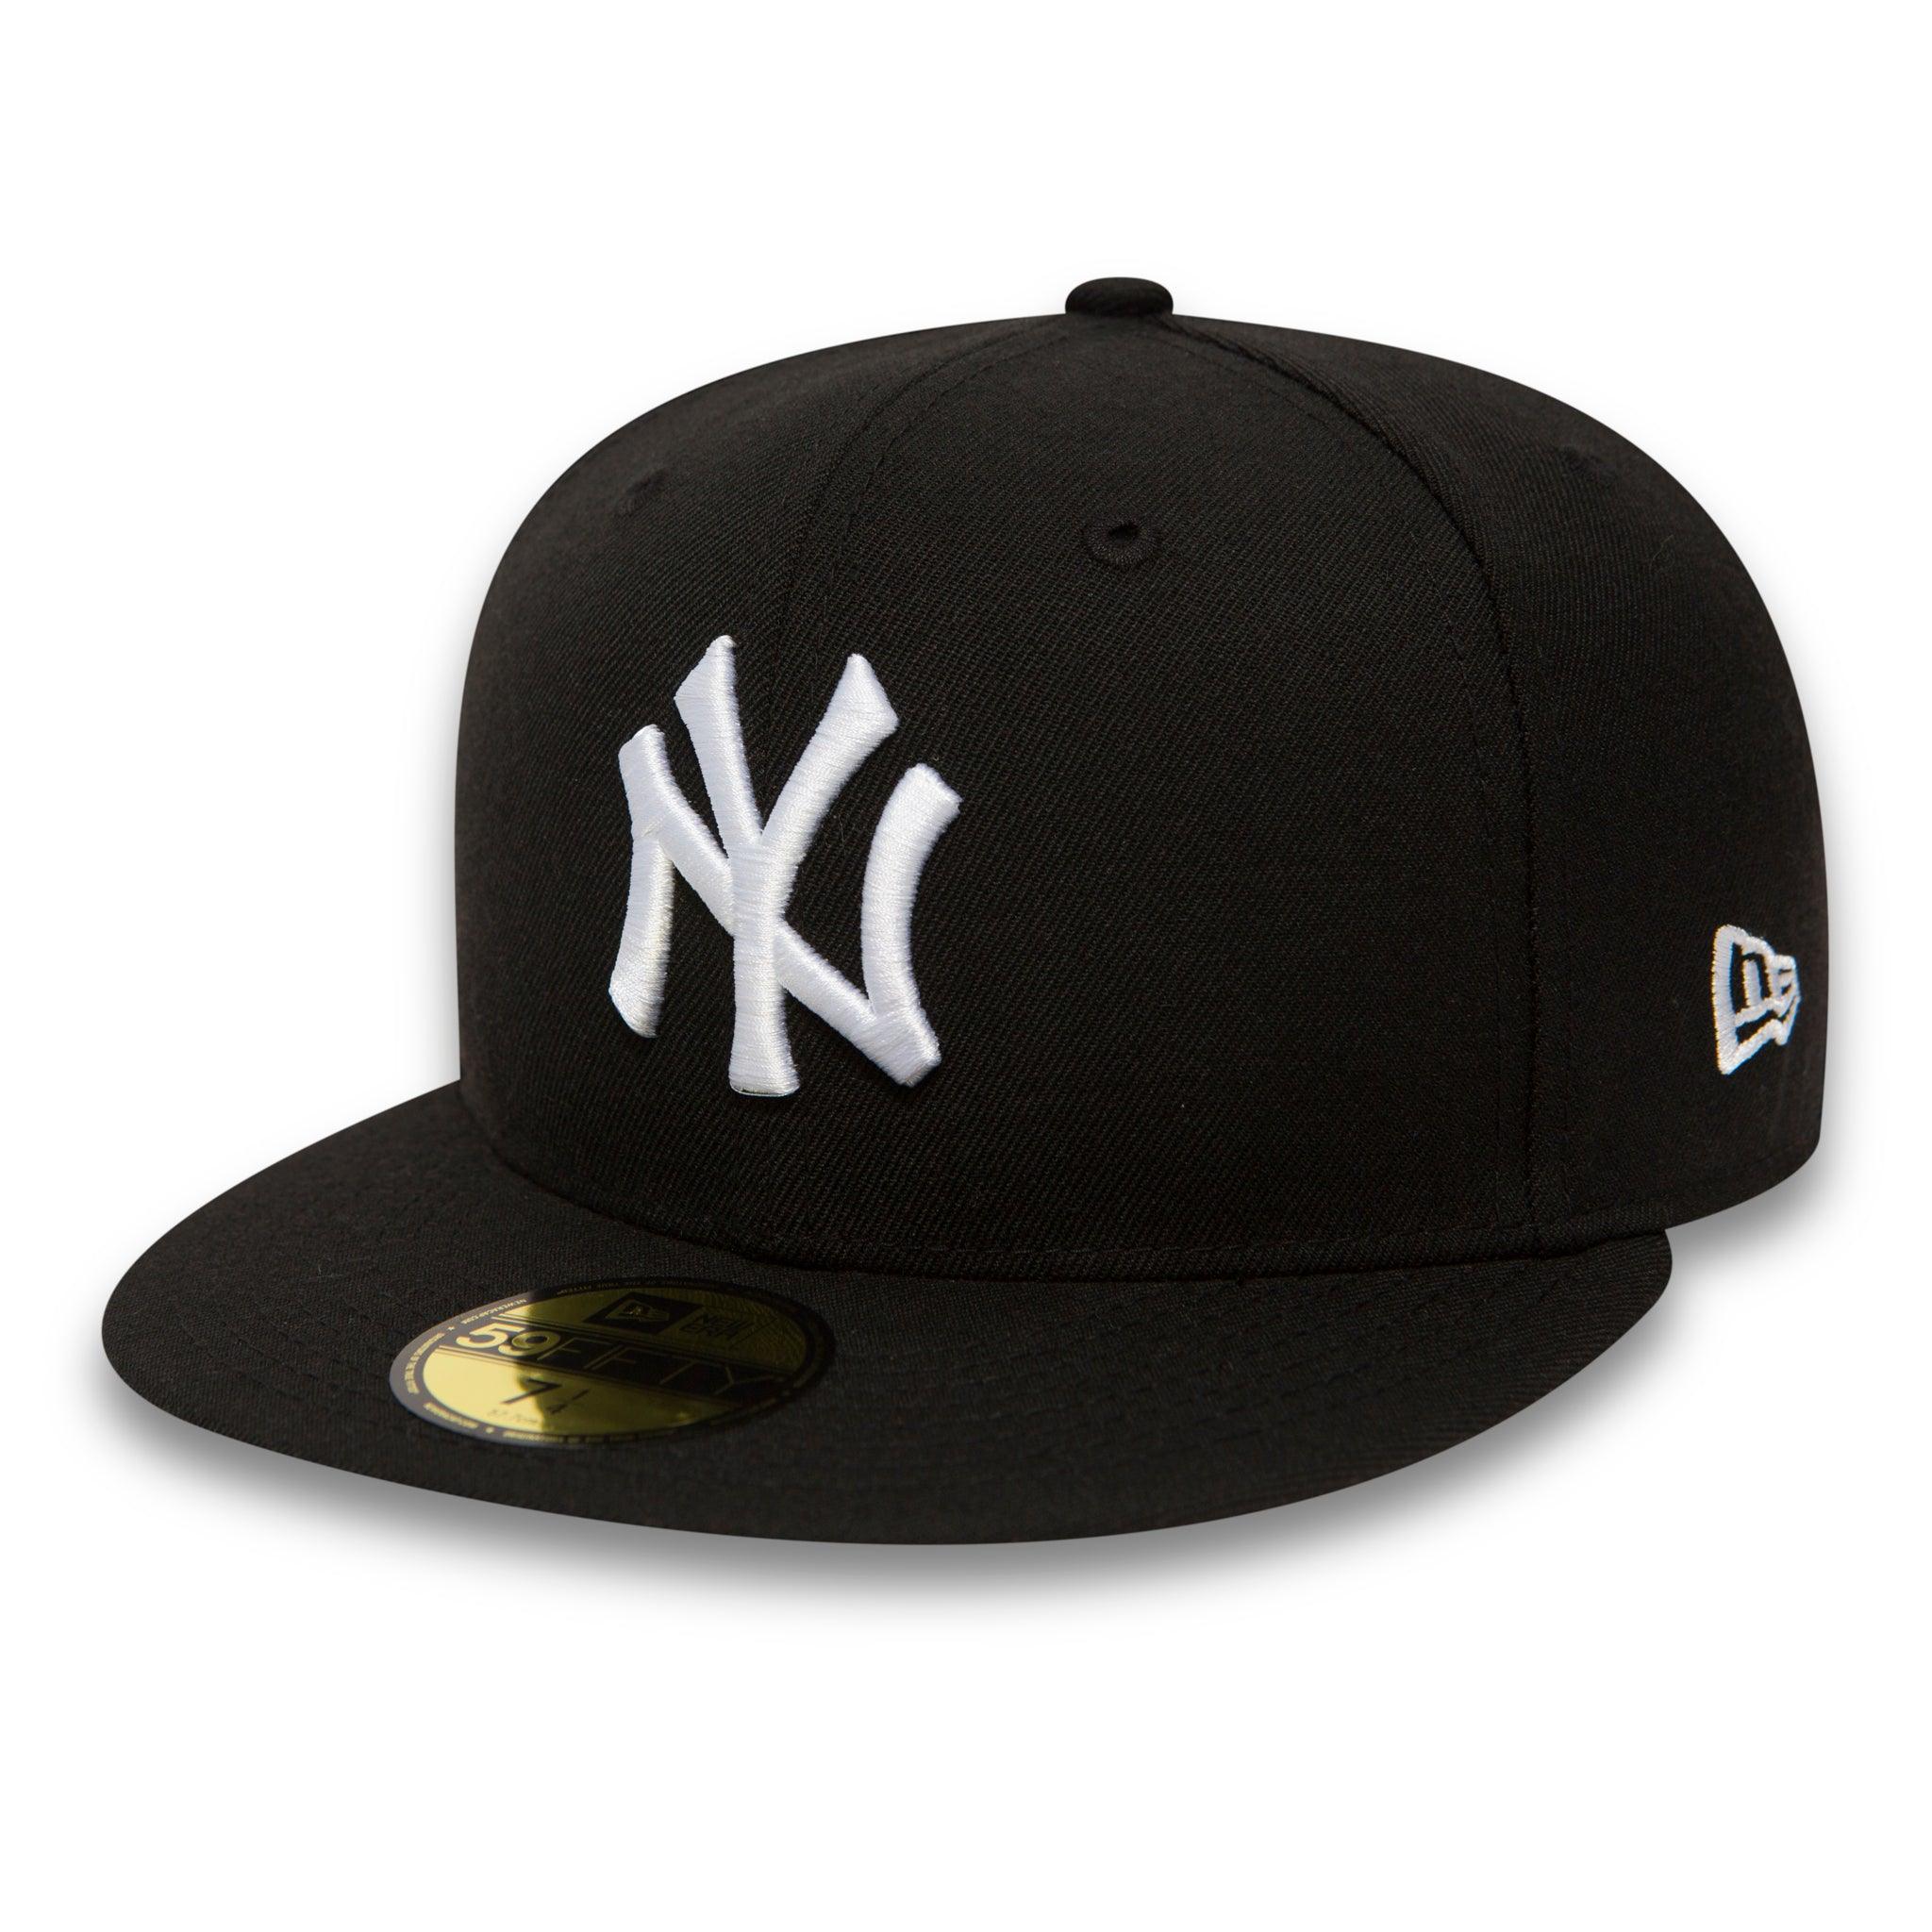 Caps New Era 59Fifty MLB Basic New York Yankees Cap Scarlet/ White